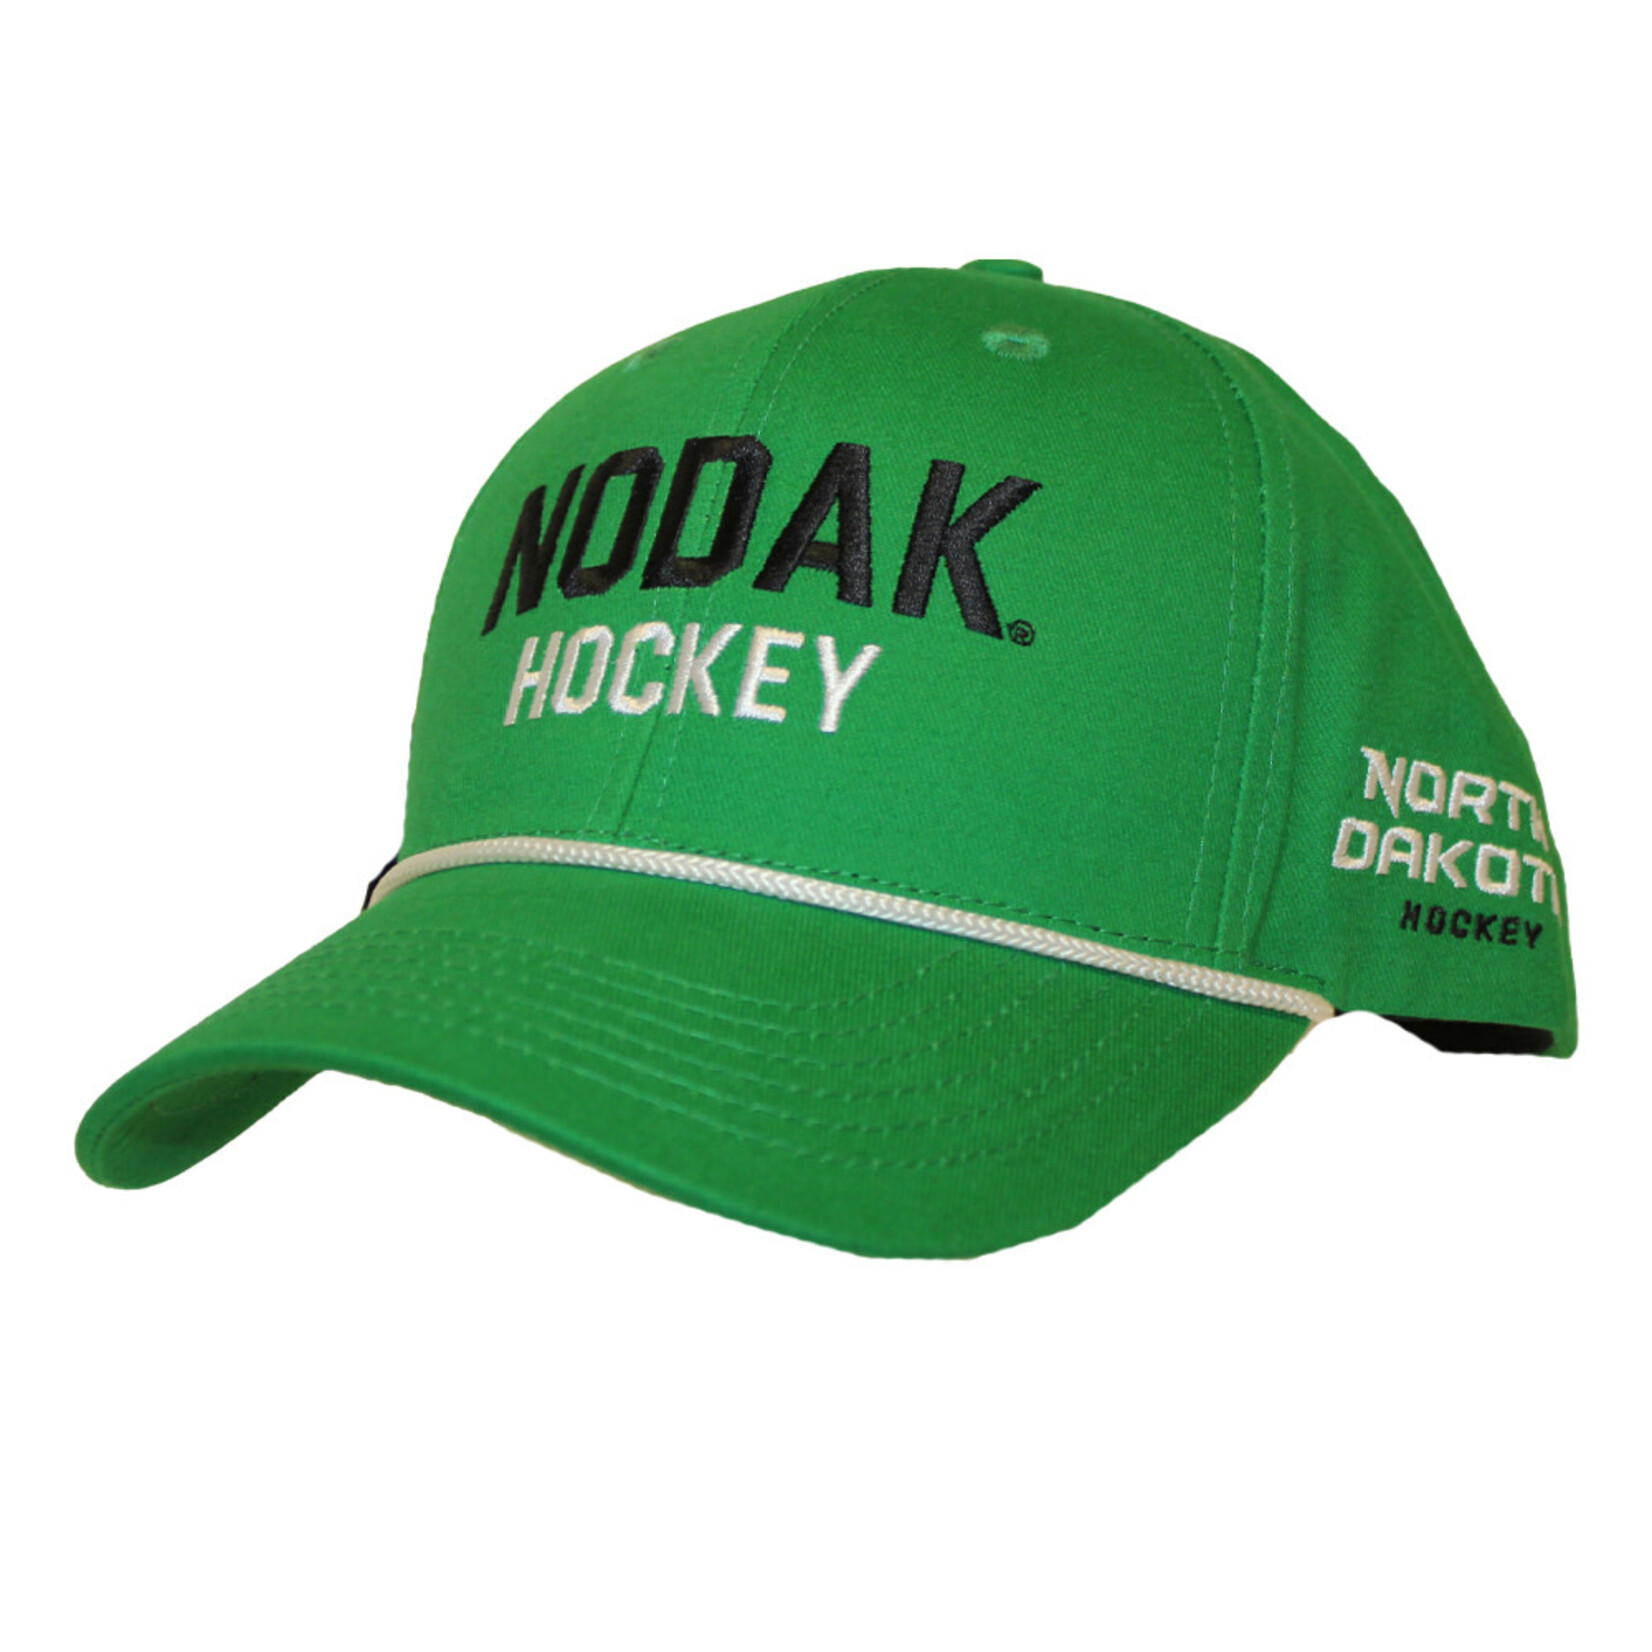 Bardown Hockey NODAK Bardown Rope Hat